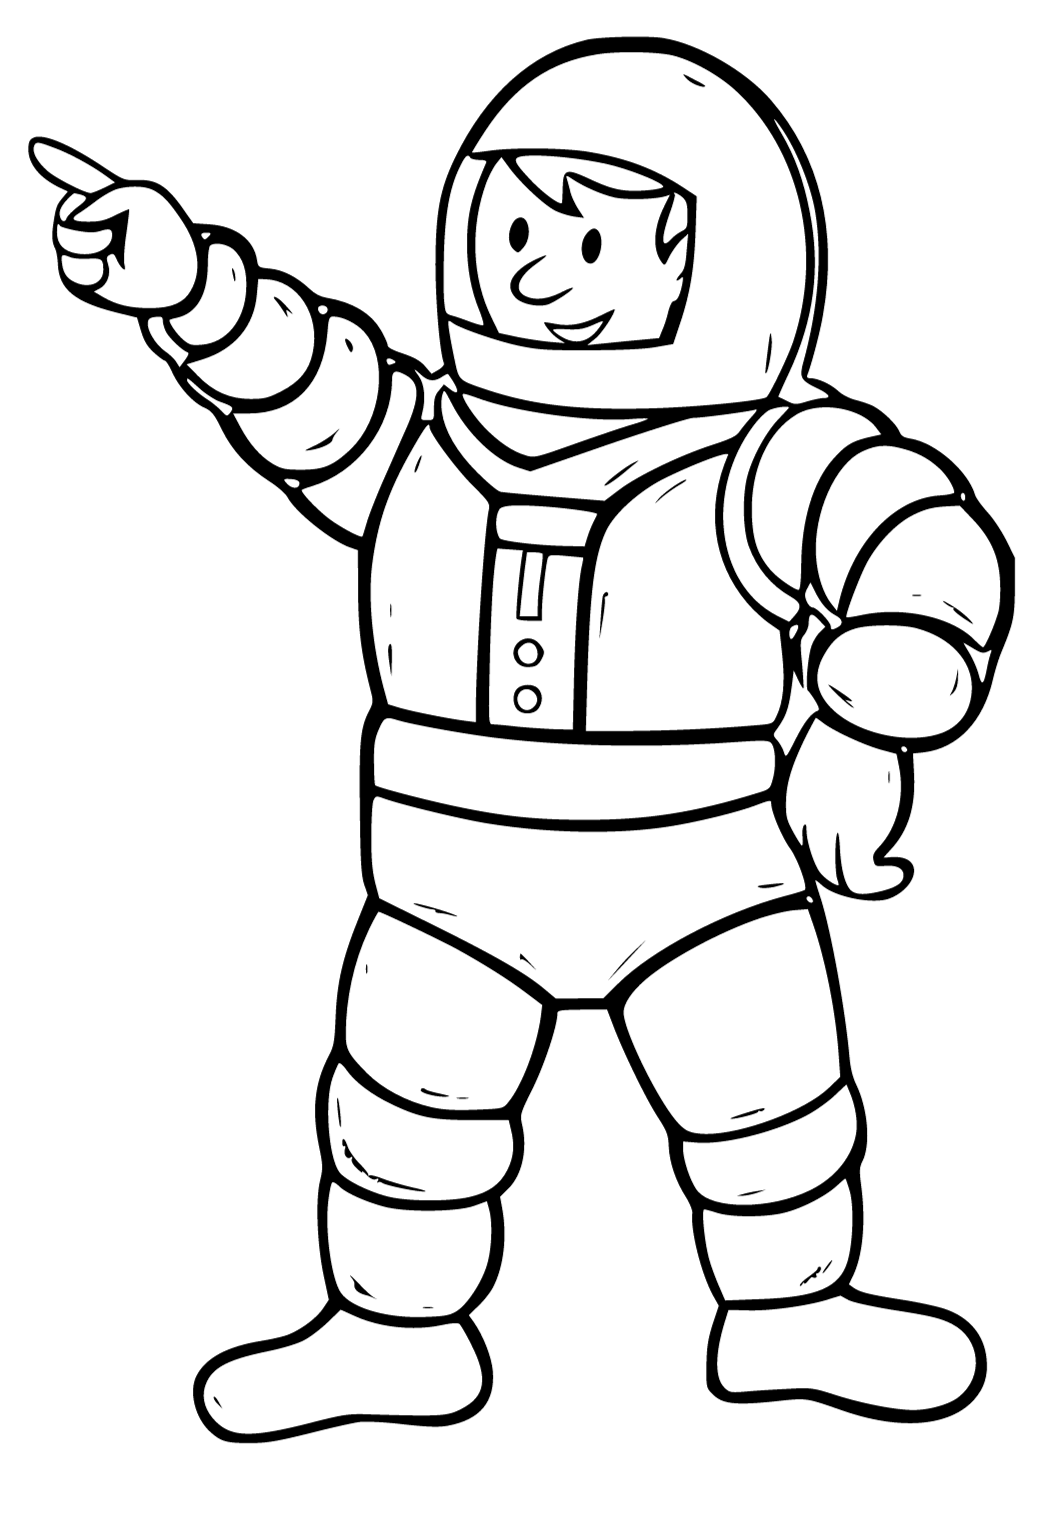 Astronautas